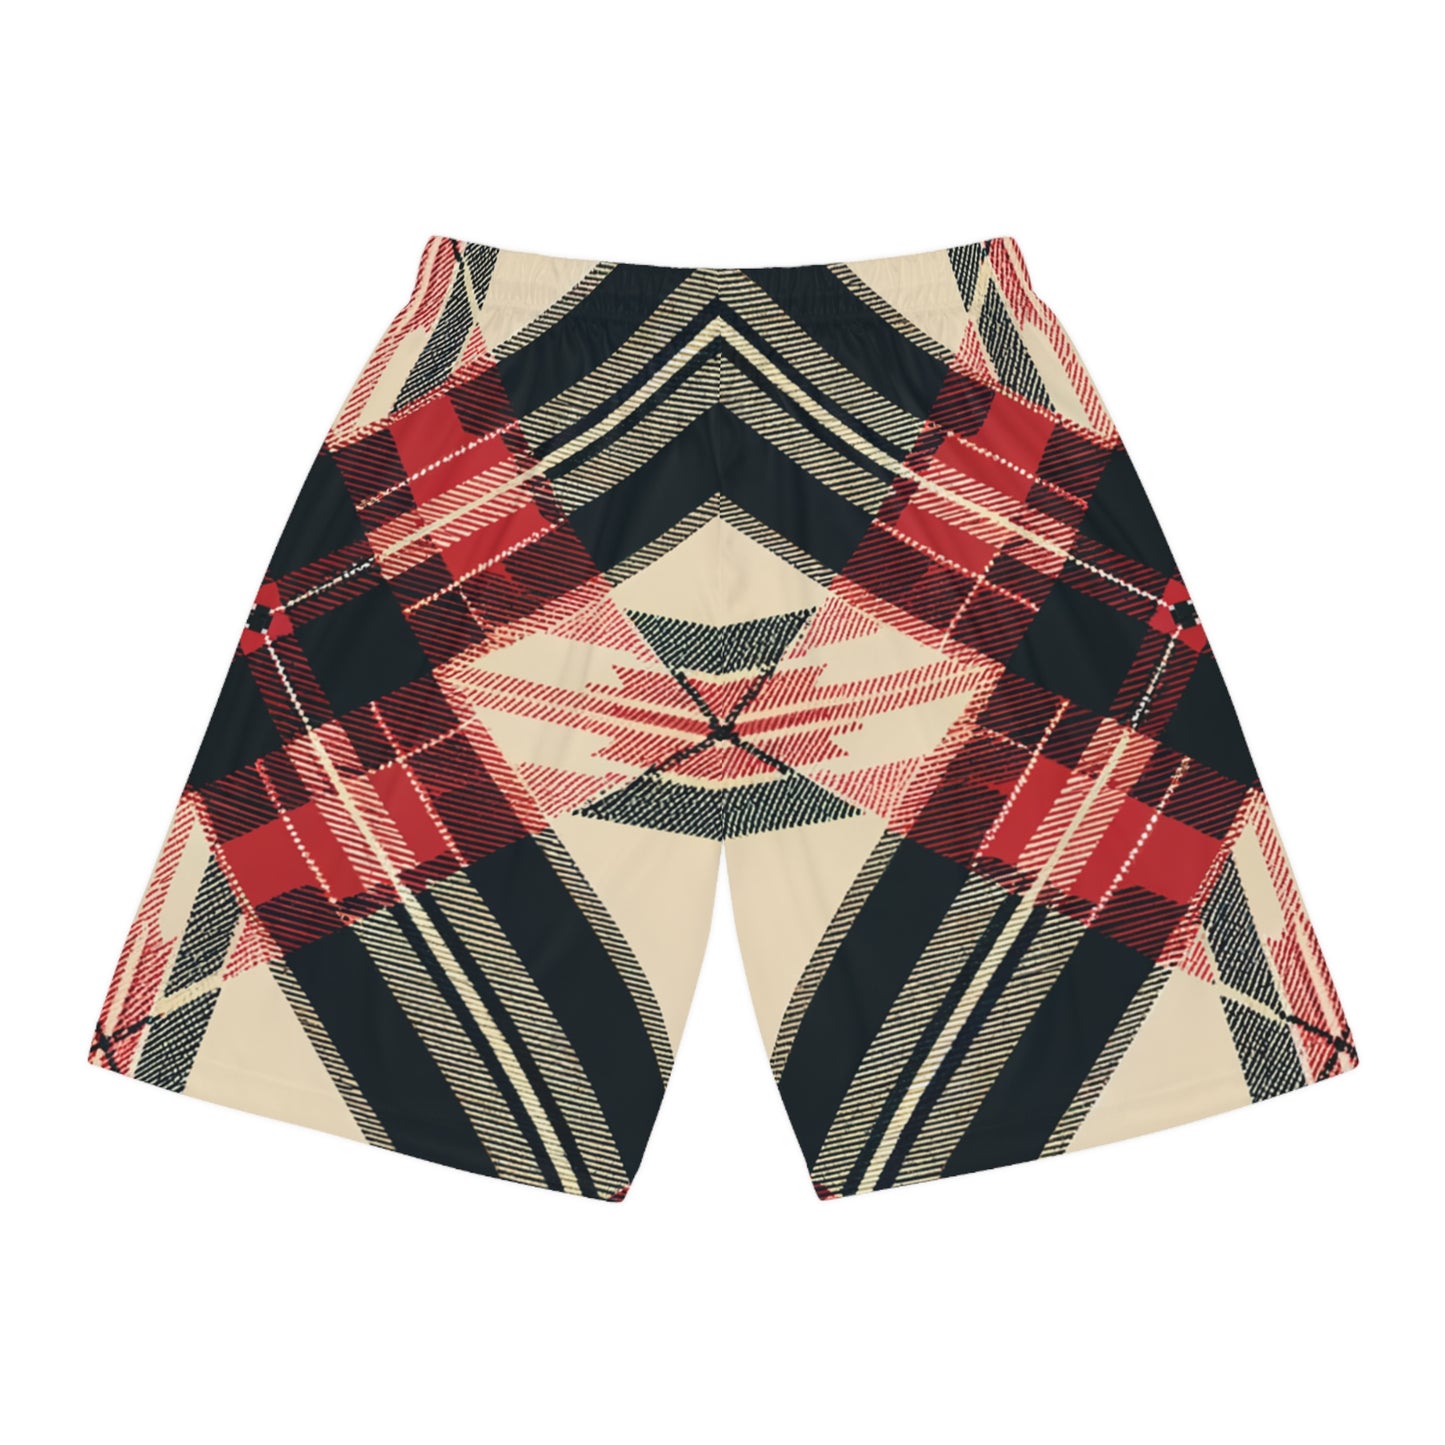 Autumn Elegance Crosshatch Tartan Plaid Everywhere Shorts